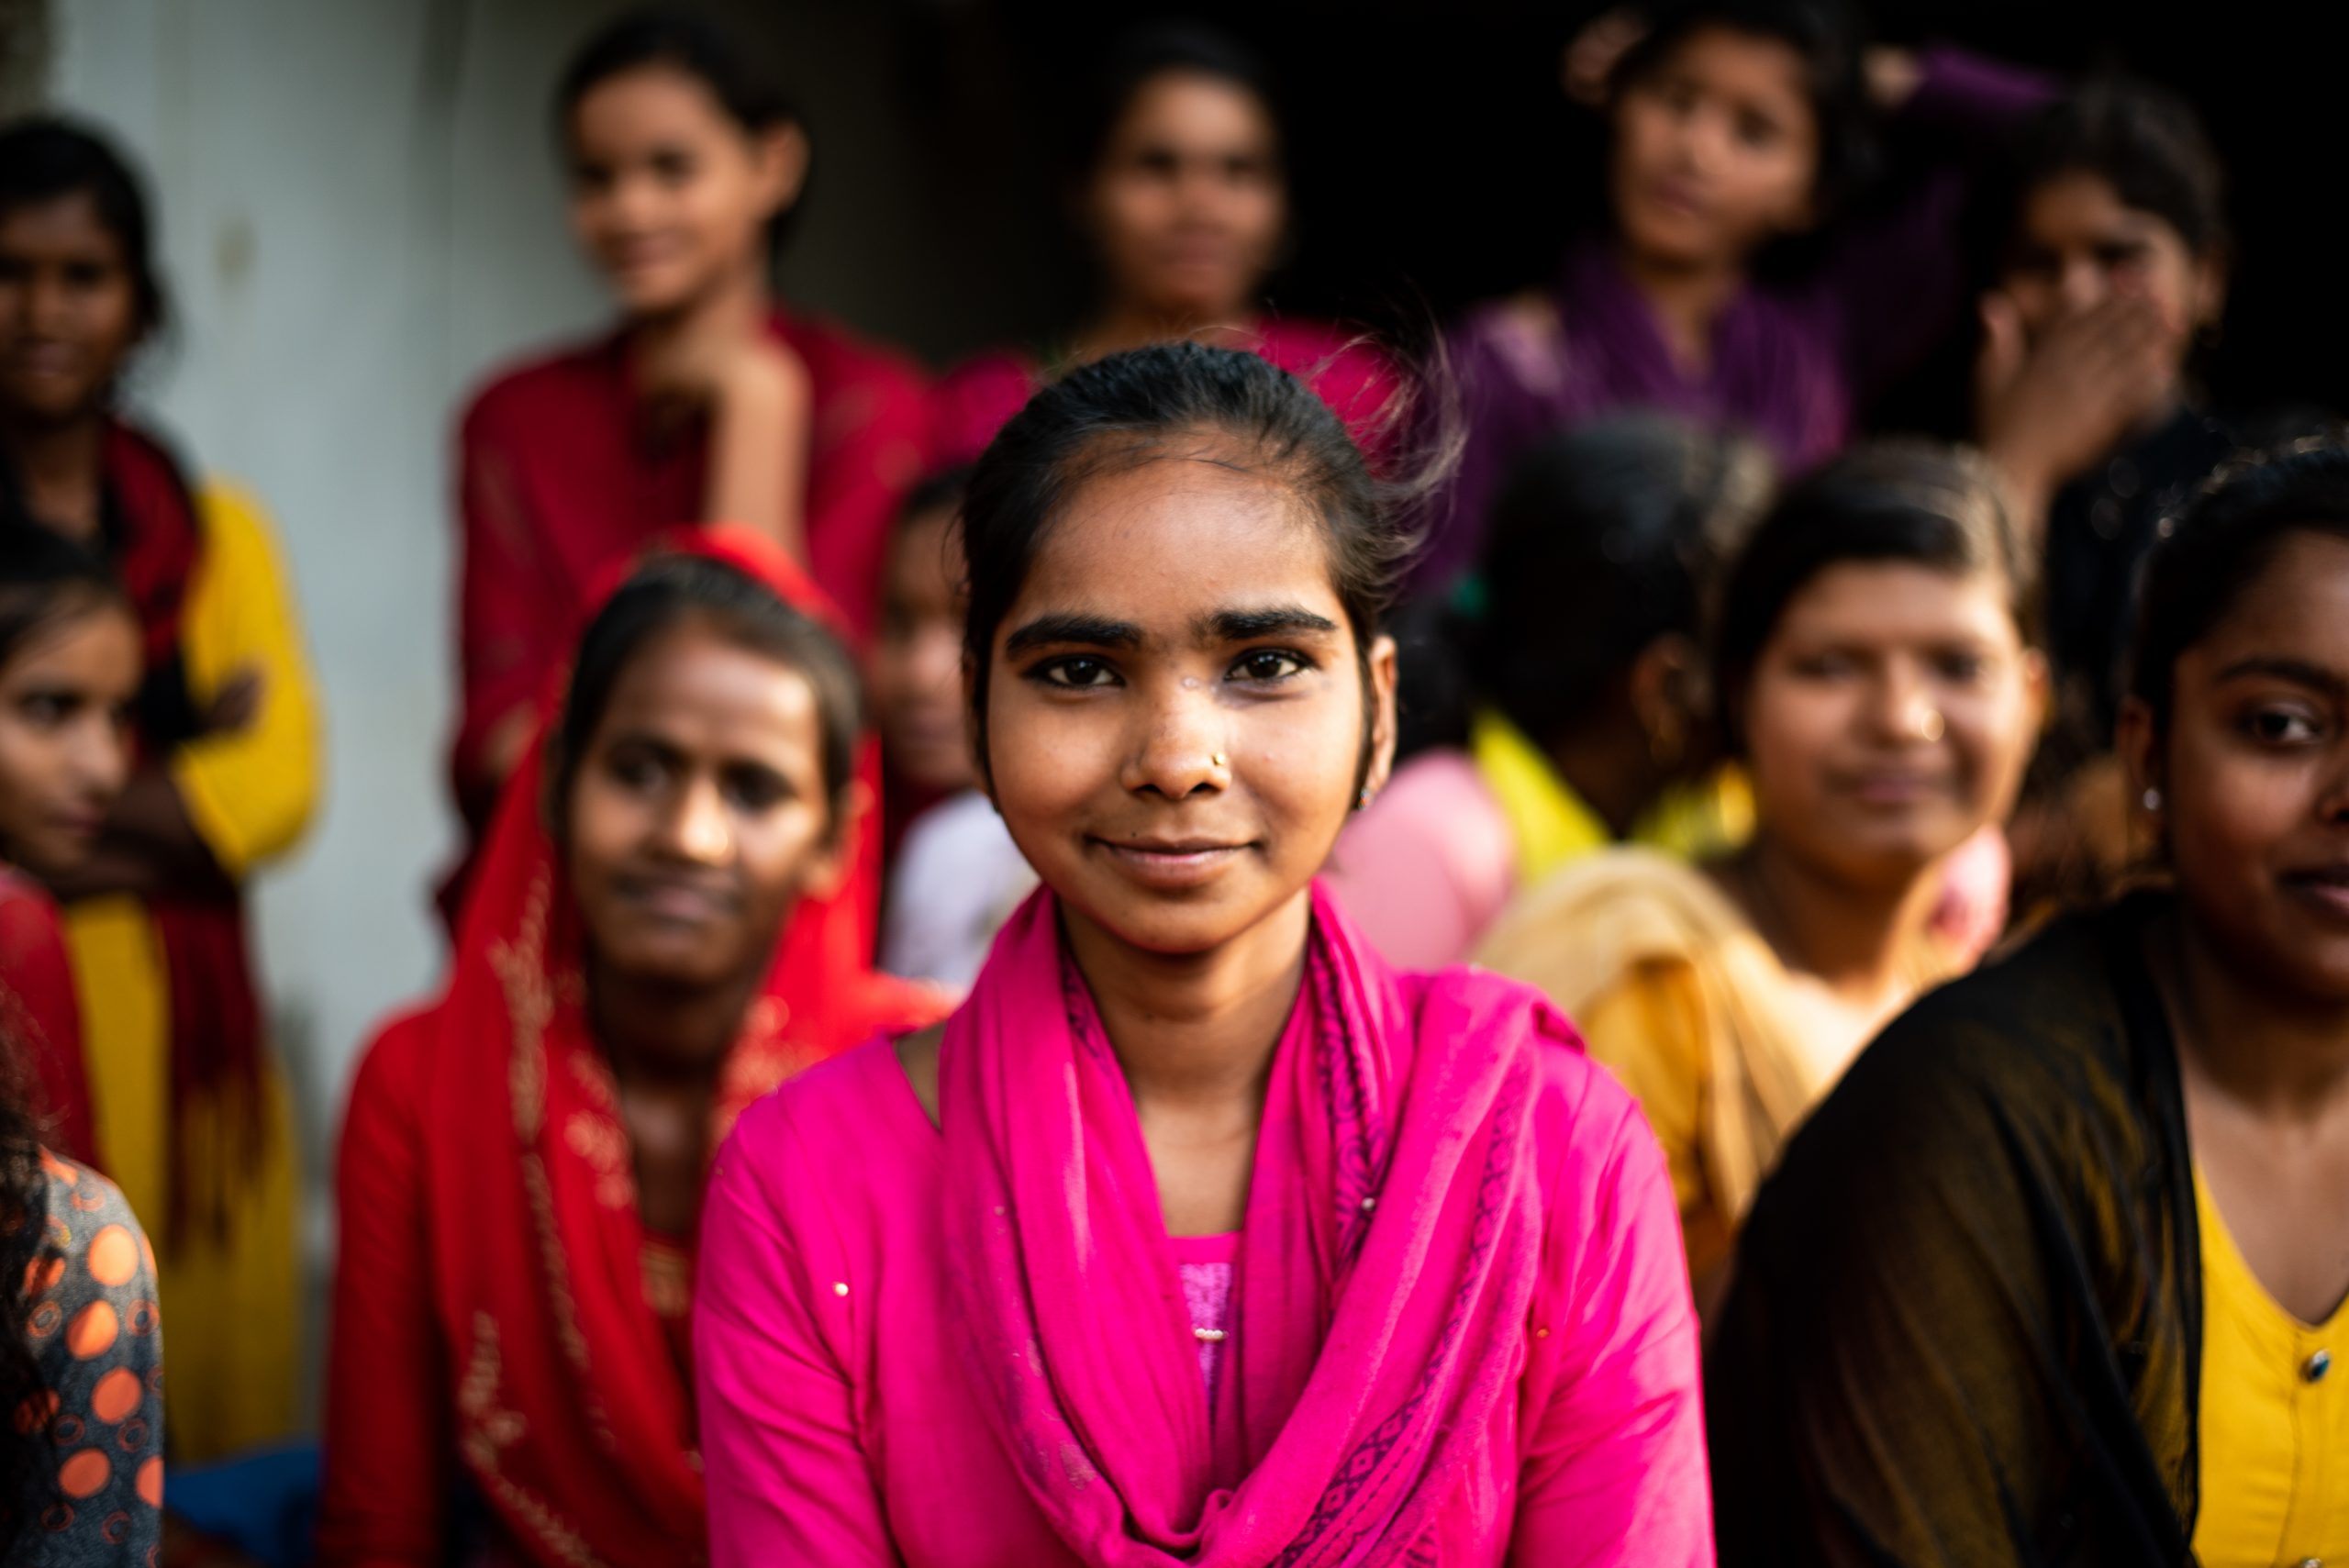 Latest report advancing Adolescent Girls in Bihar